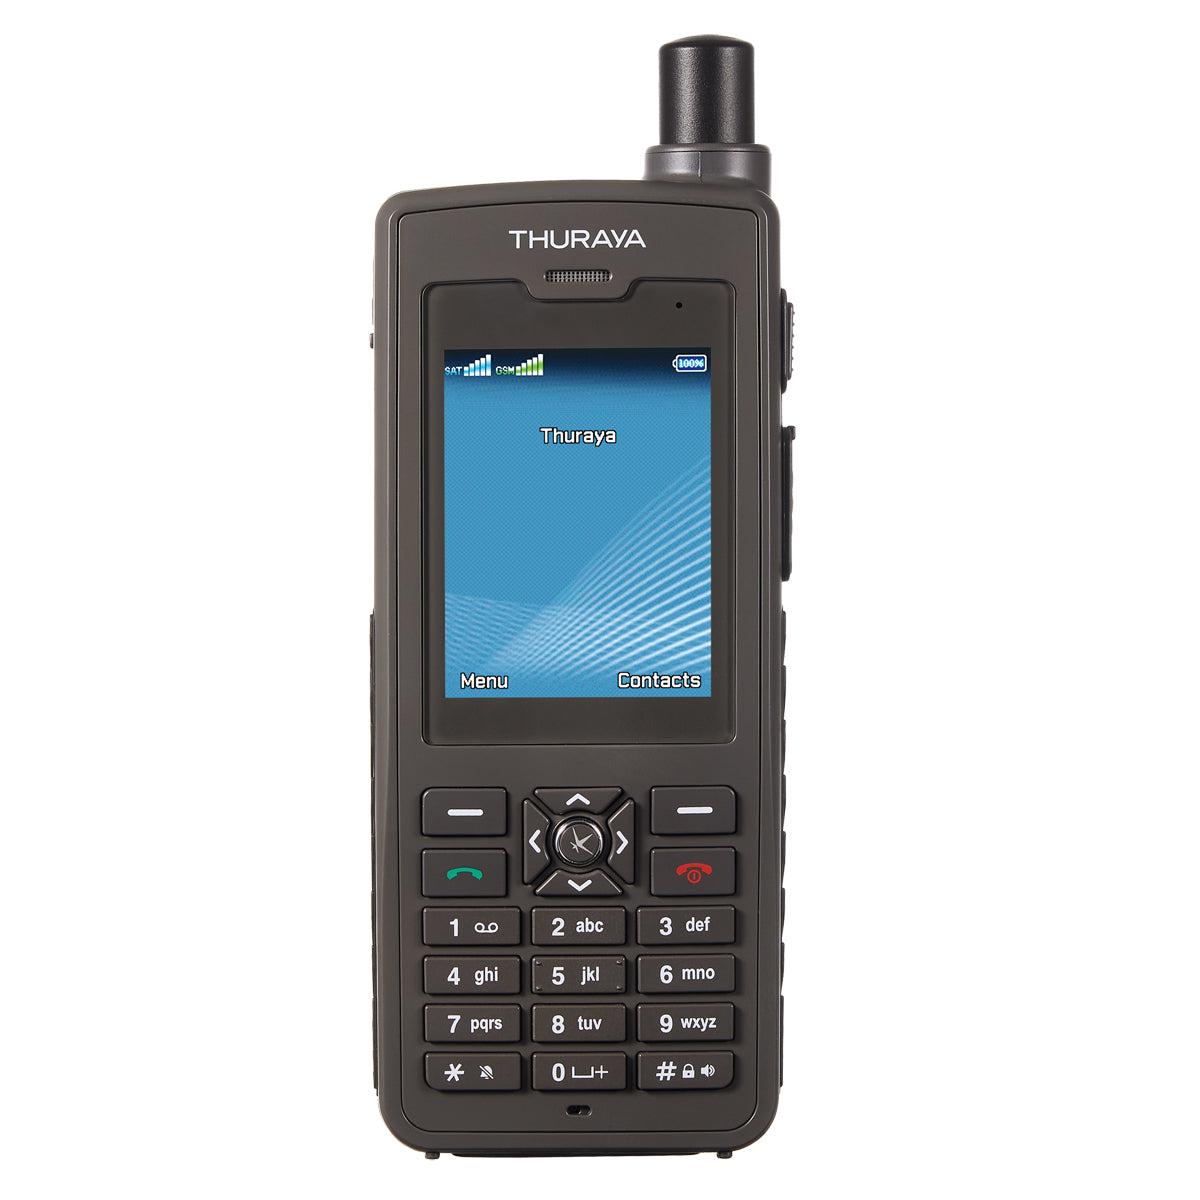 Teléfono satelital Thuraya XT-PRO DUAL